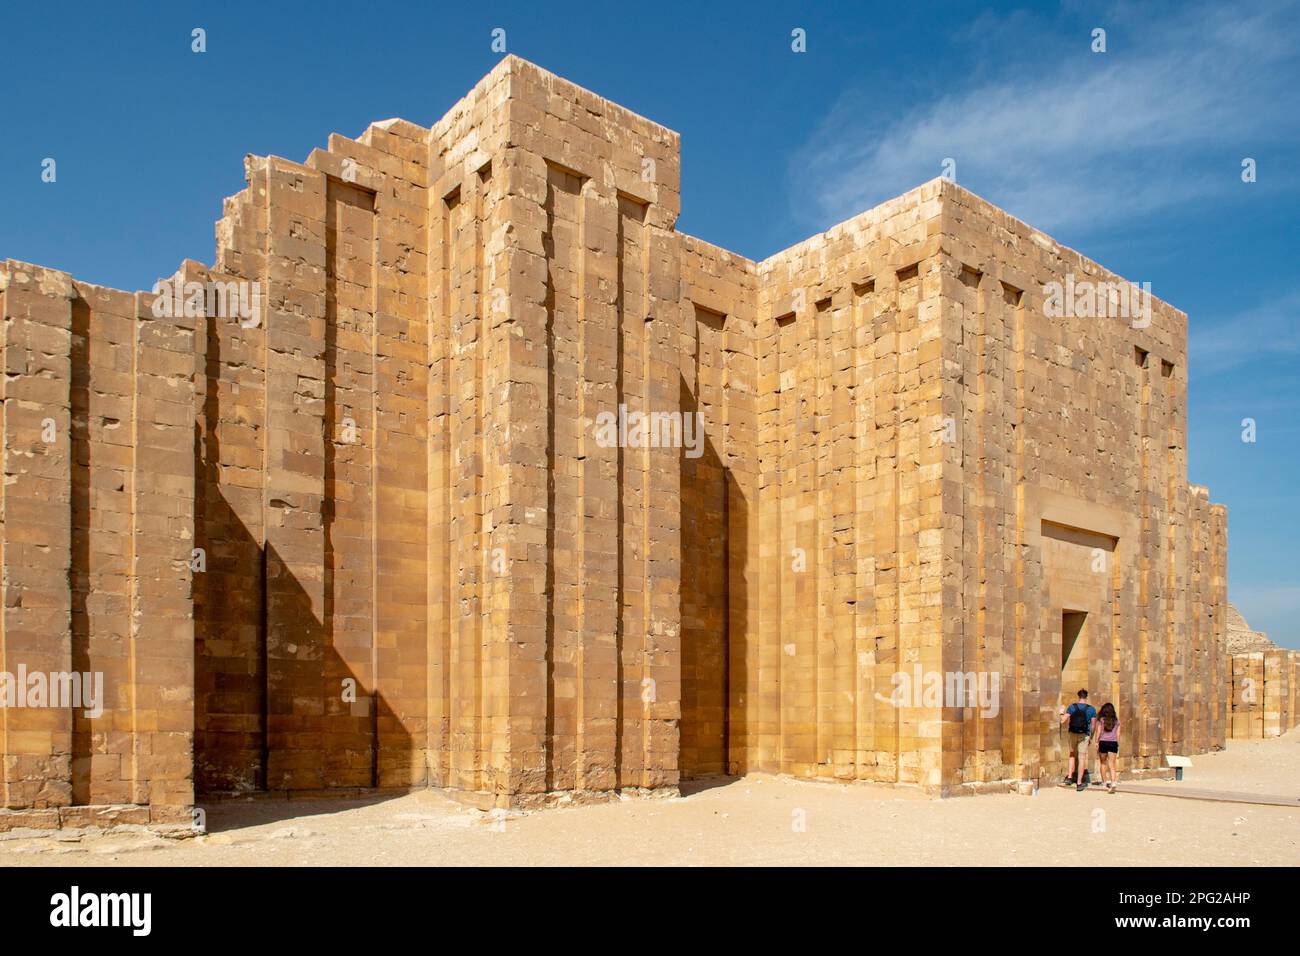 Ingresso alla piramide a gradoni di Djoser, Sakkara, Egitto Foto Stock